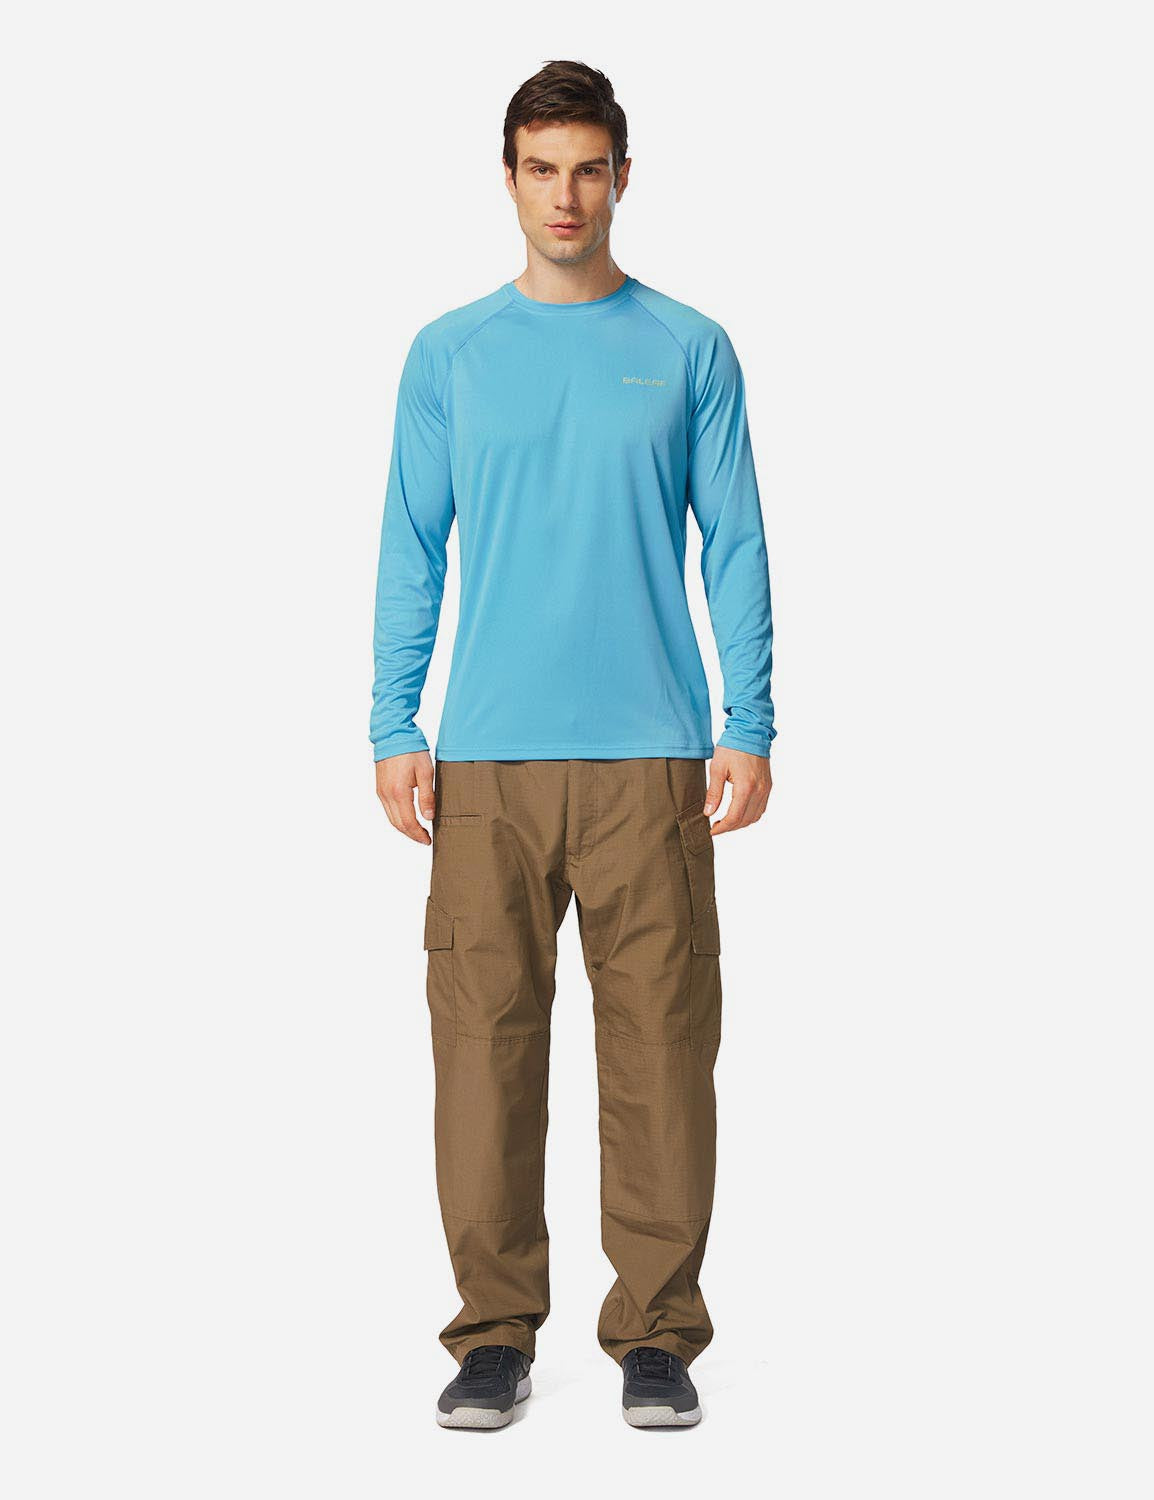 Baleaf Men's UPF50+ Long Sleeved Loose Fit Casual T-Shirt aga002 Blue Full